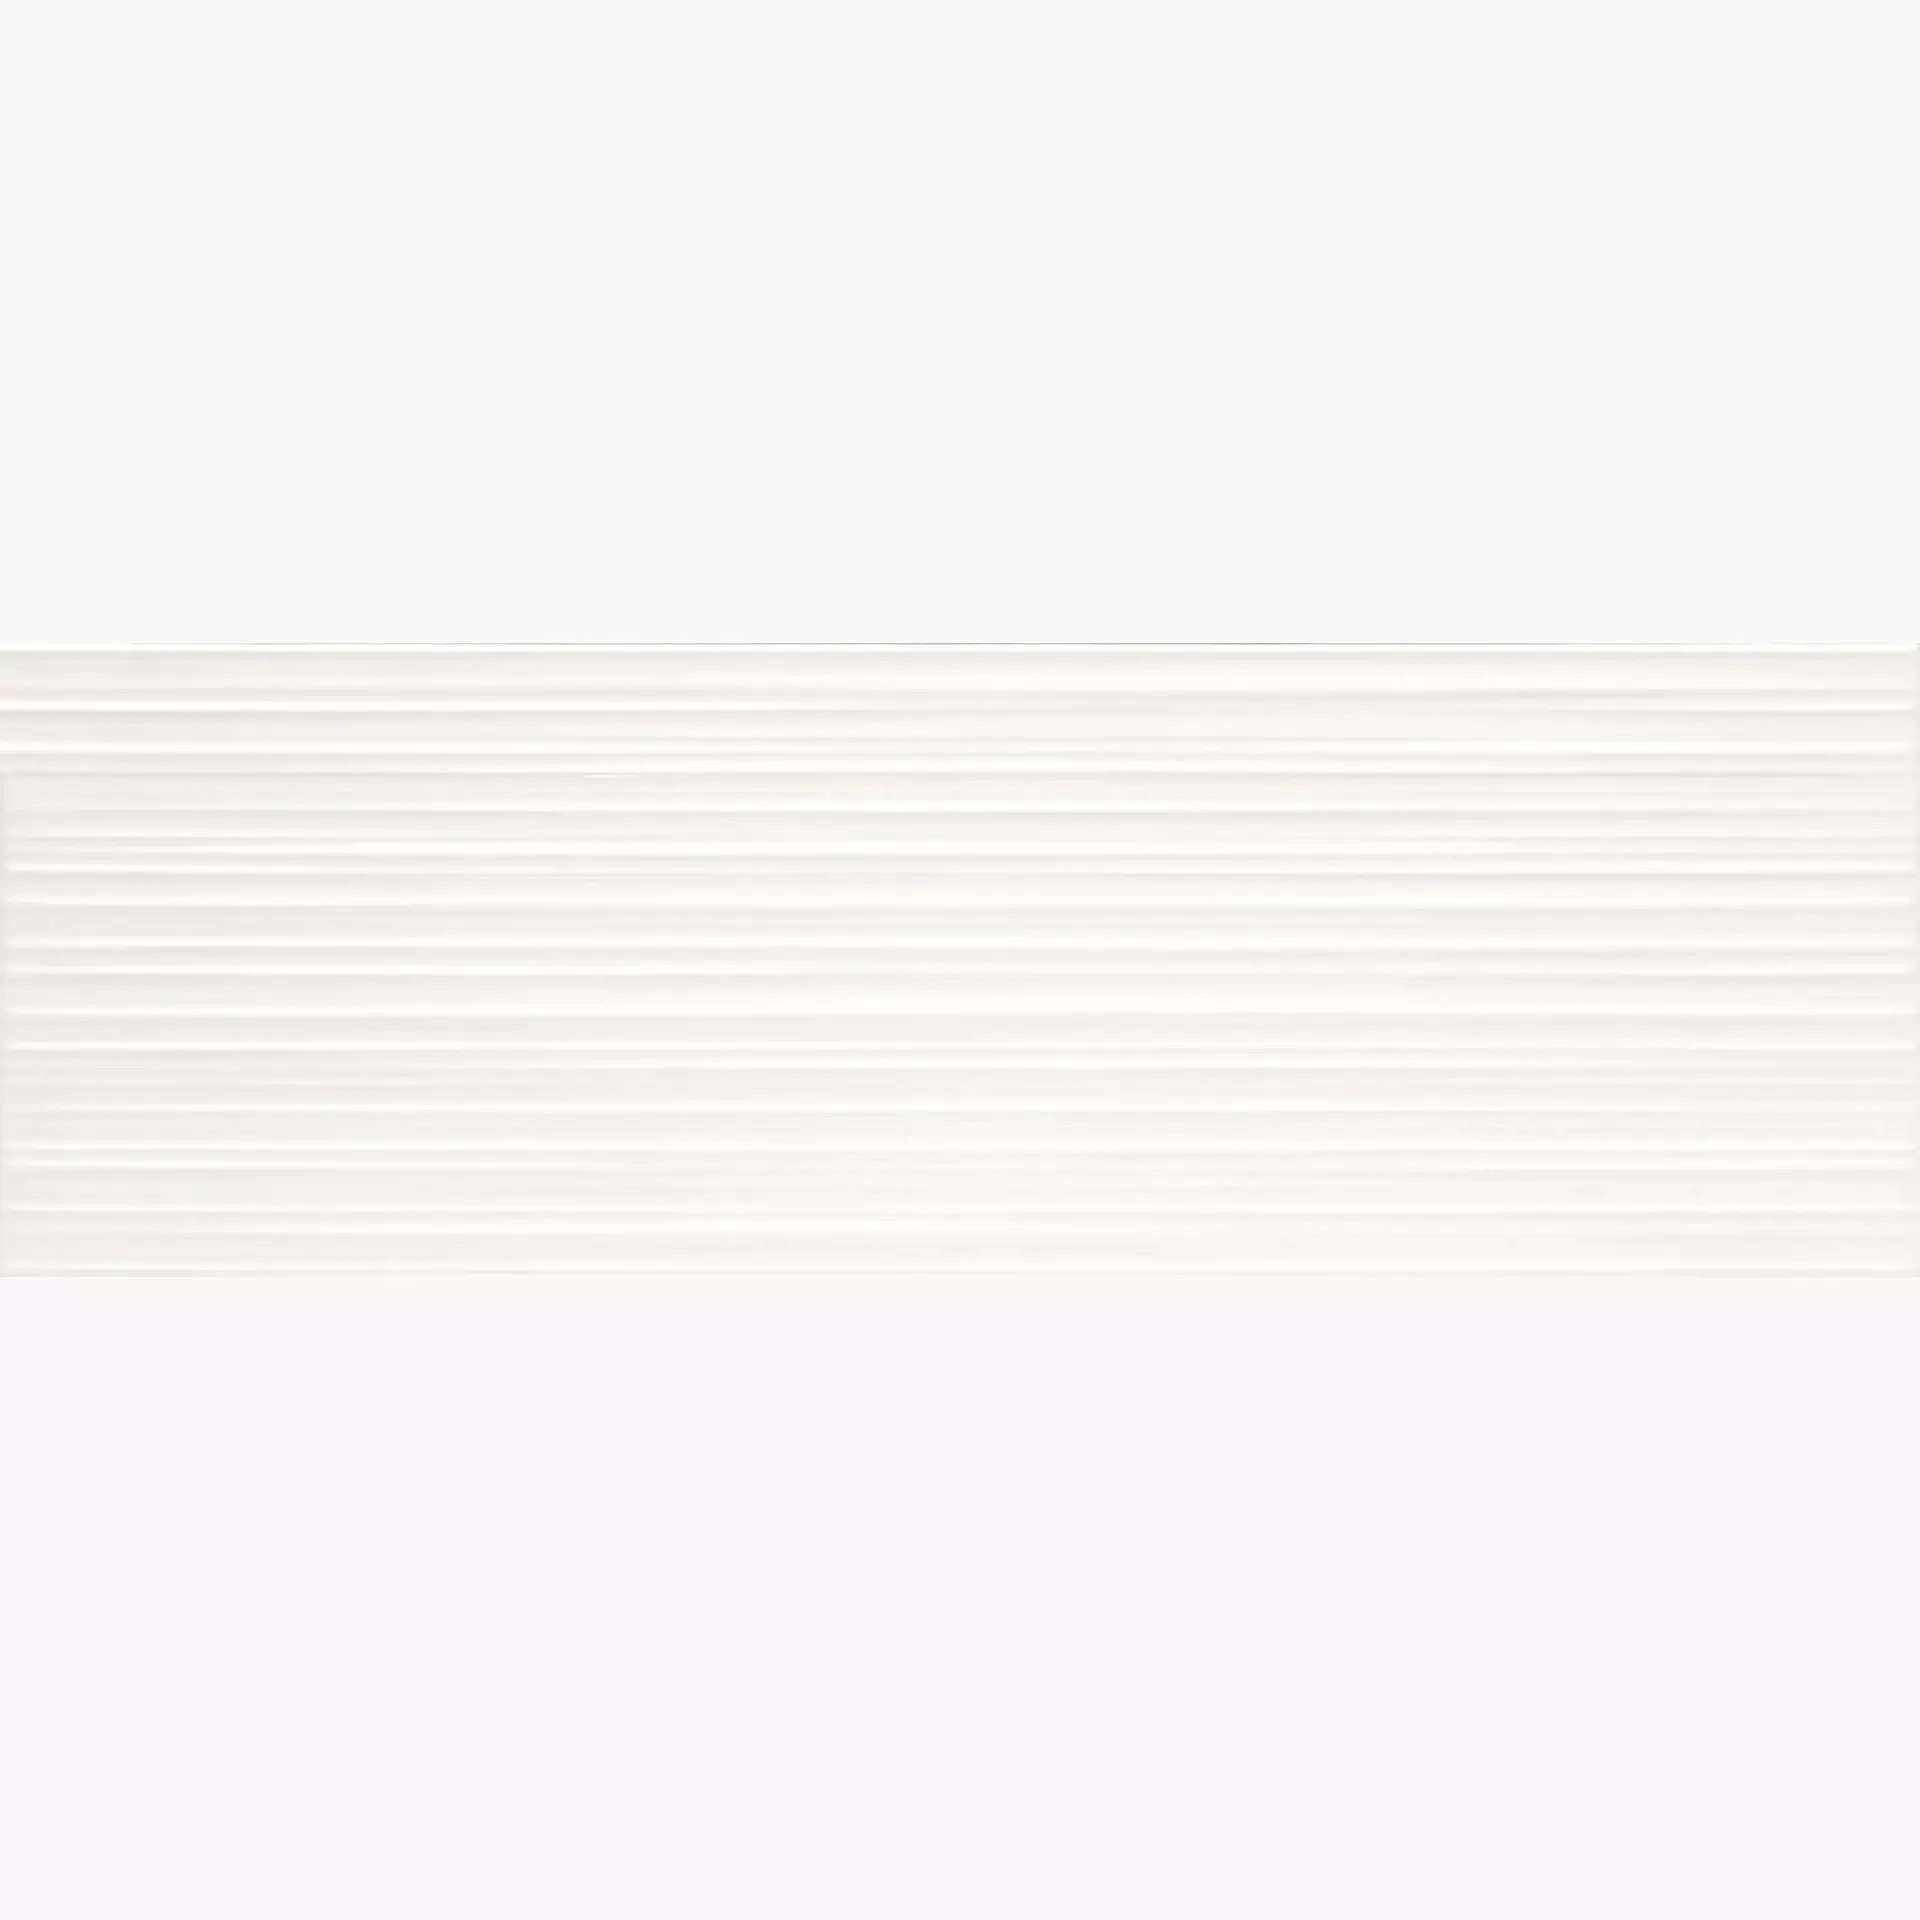 Wandfliese Marazzi Absolute White Bianco Satinato Struttura Bianco M022 satiniert struktur 25x76cm Fiber 3D 9mm